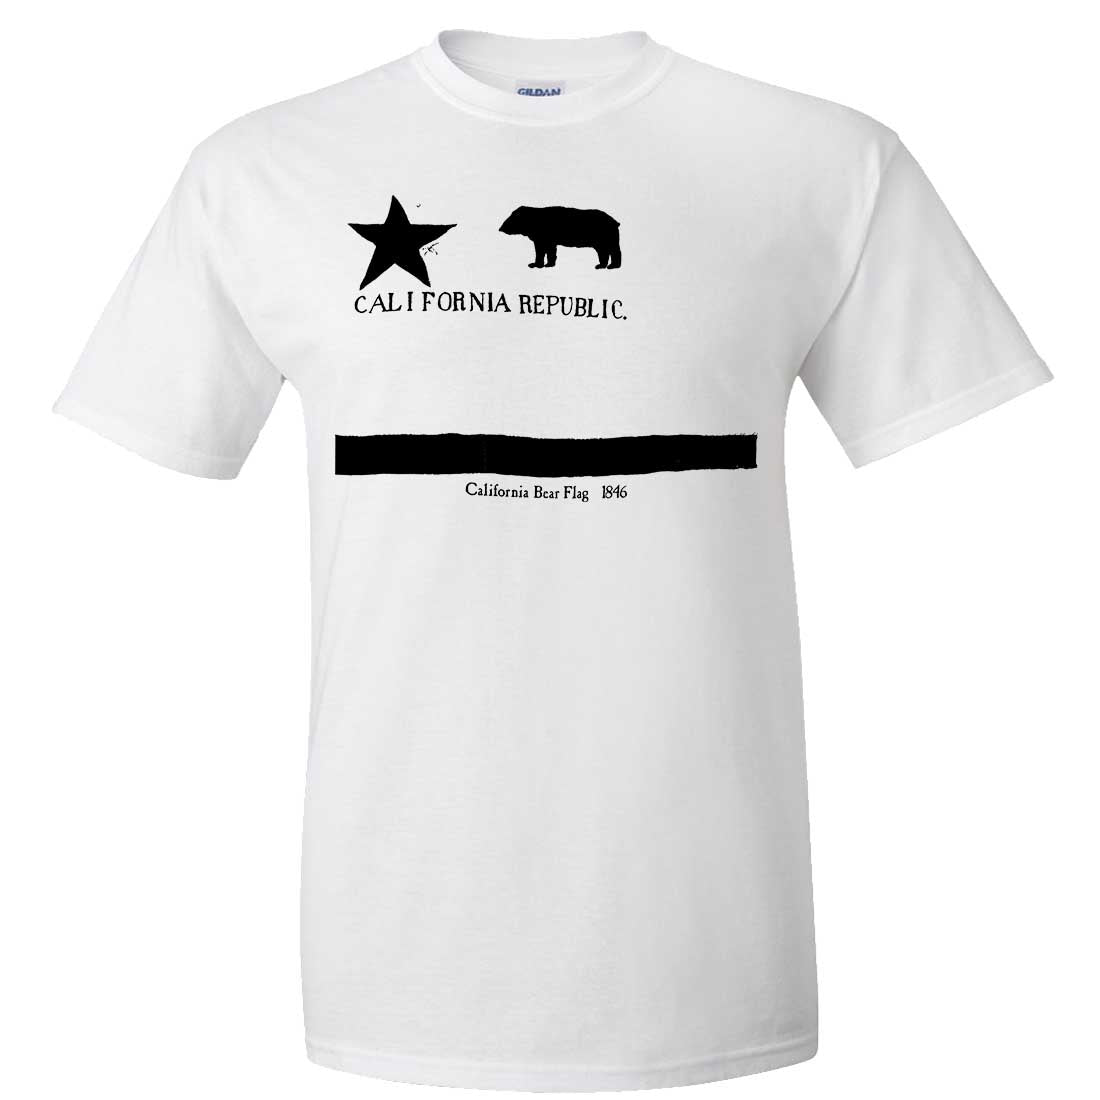 Old California Bear Flag 1846 Black Print Asst Colors T-shirt/tee